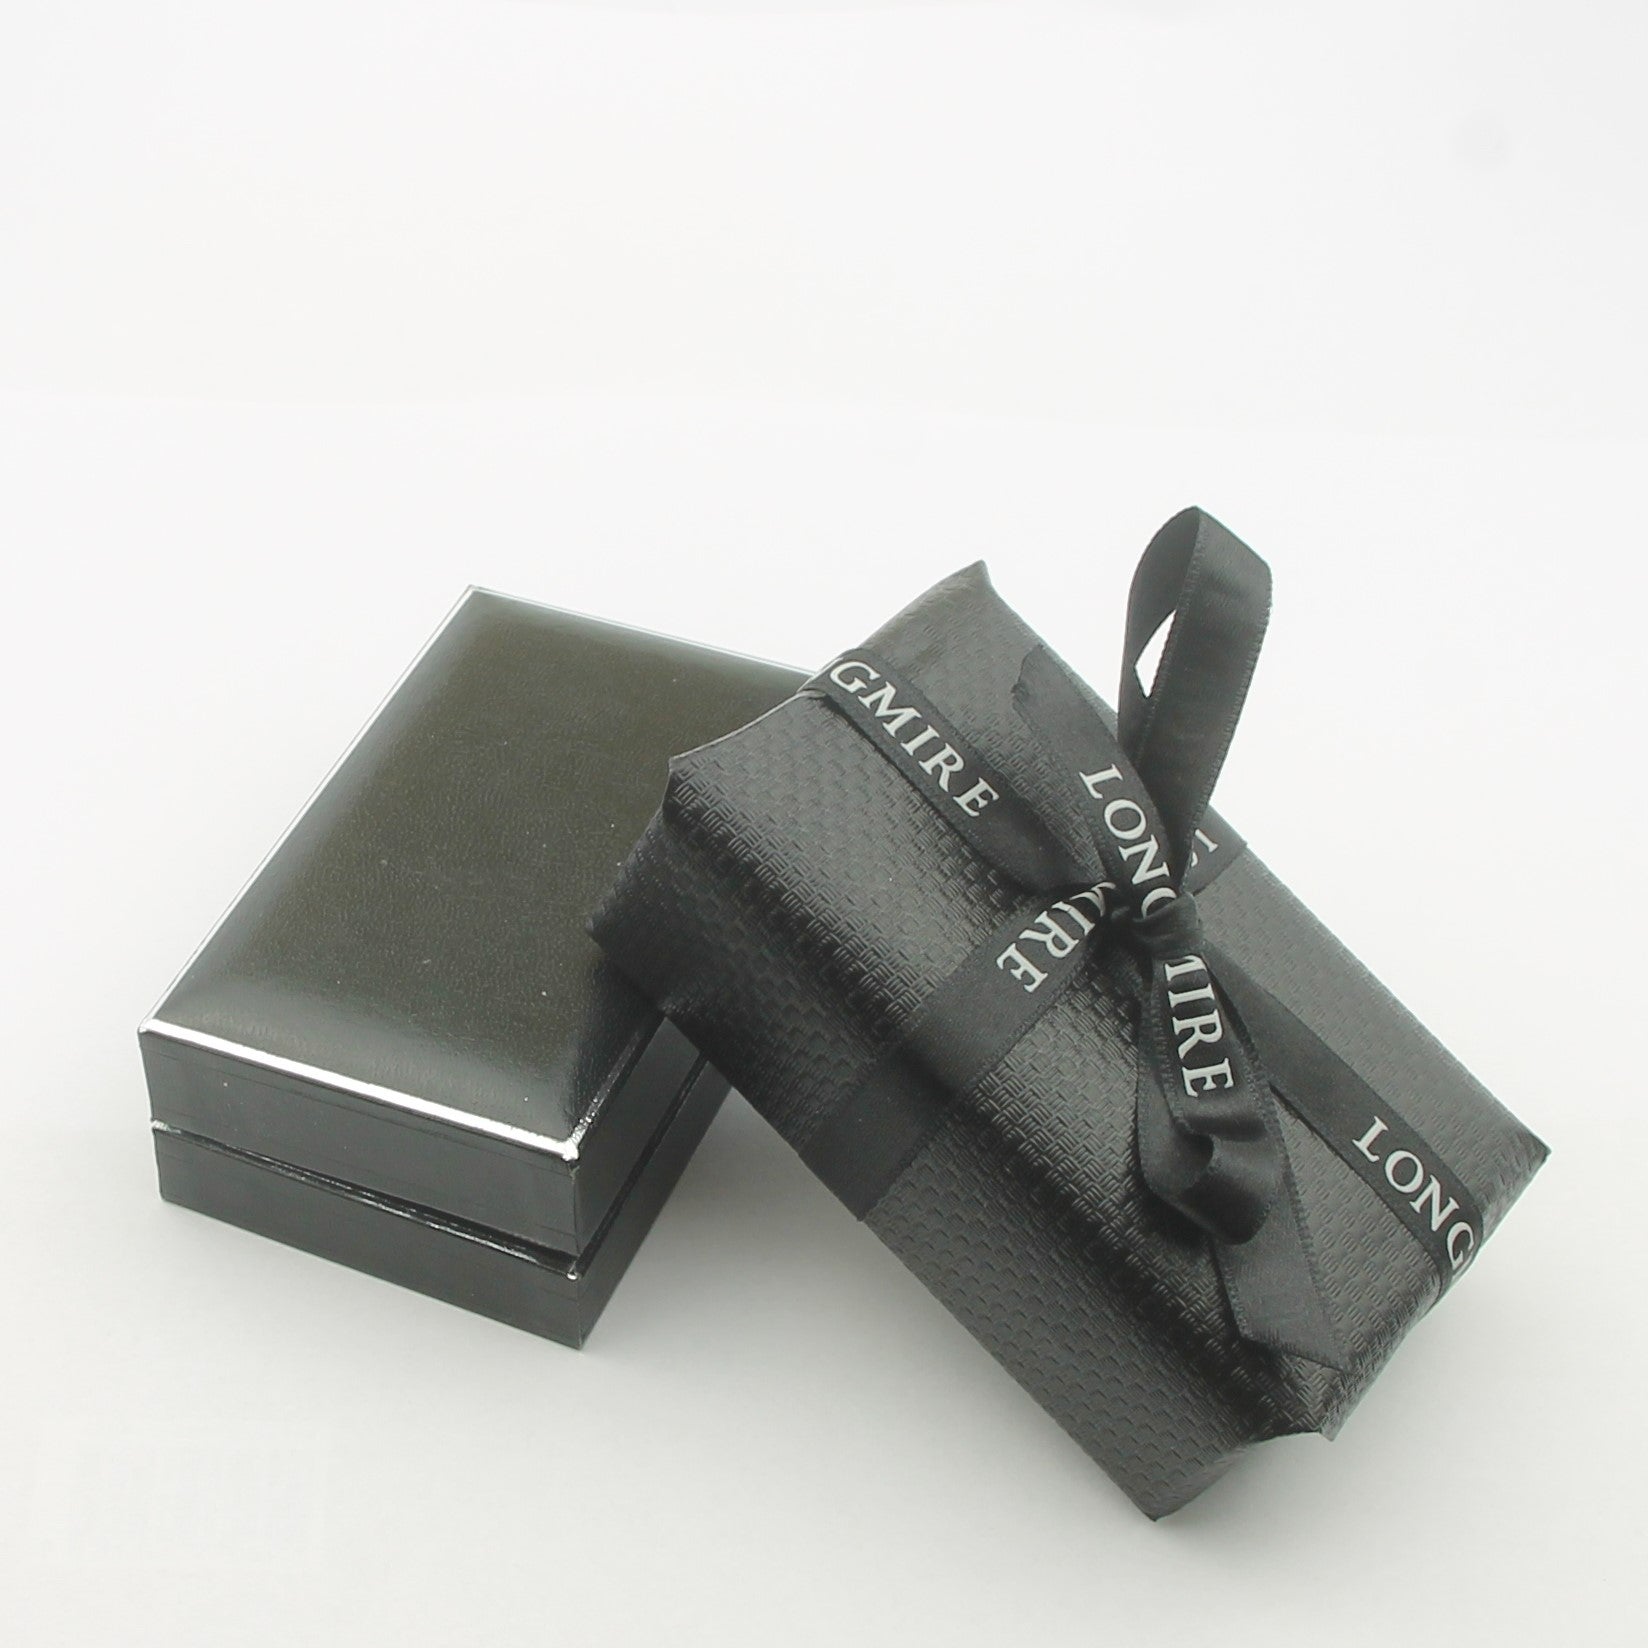 Longmire gift box - black